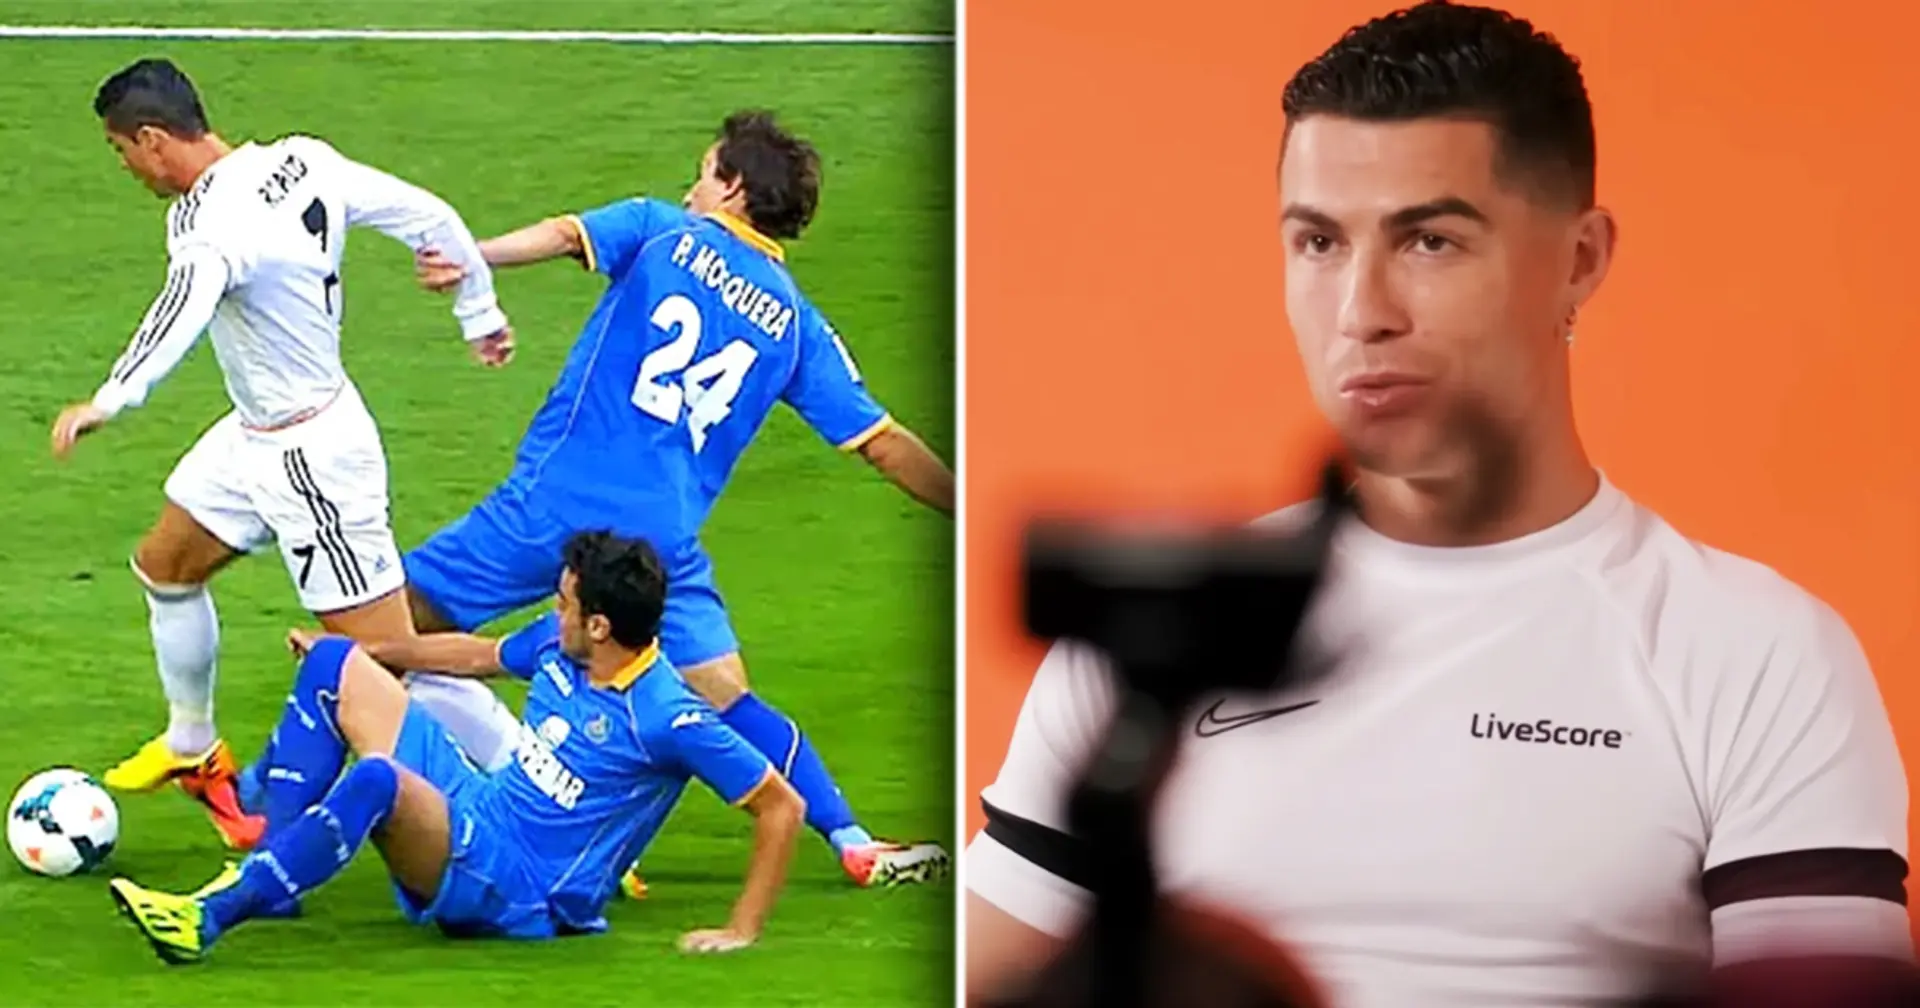 Cristiano Ronaldo nennt seinen Lieblingsmoment bei Real Madrid - es ist nicht das Tor per Fallrückzieher